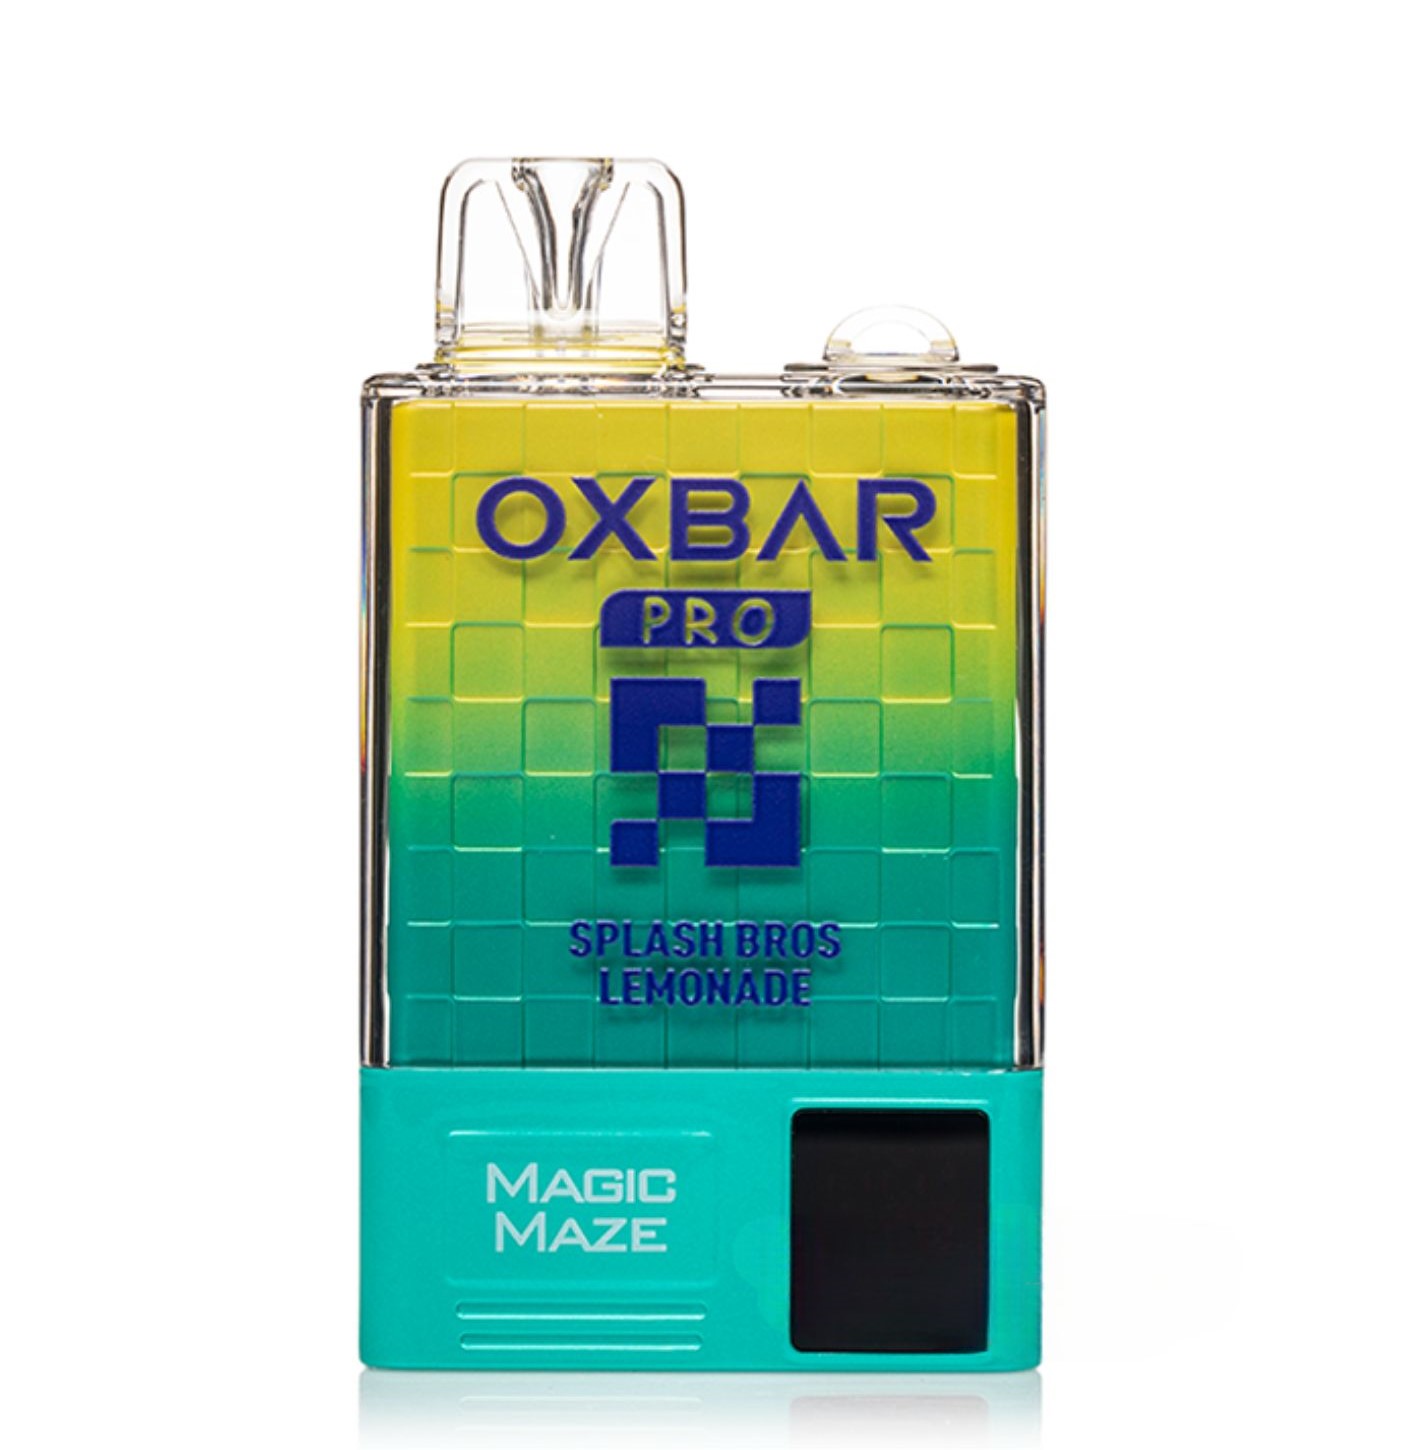 Oxbar Magic Maze Pro Disposable Pf Splash Bros Lemonade Box Of Empire Smoke Distributors